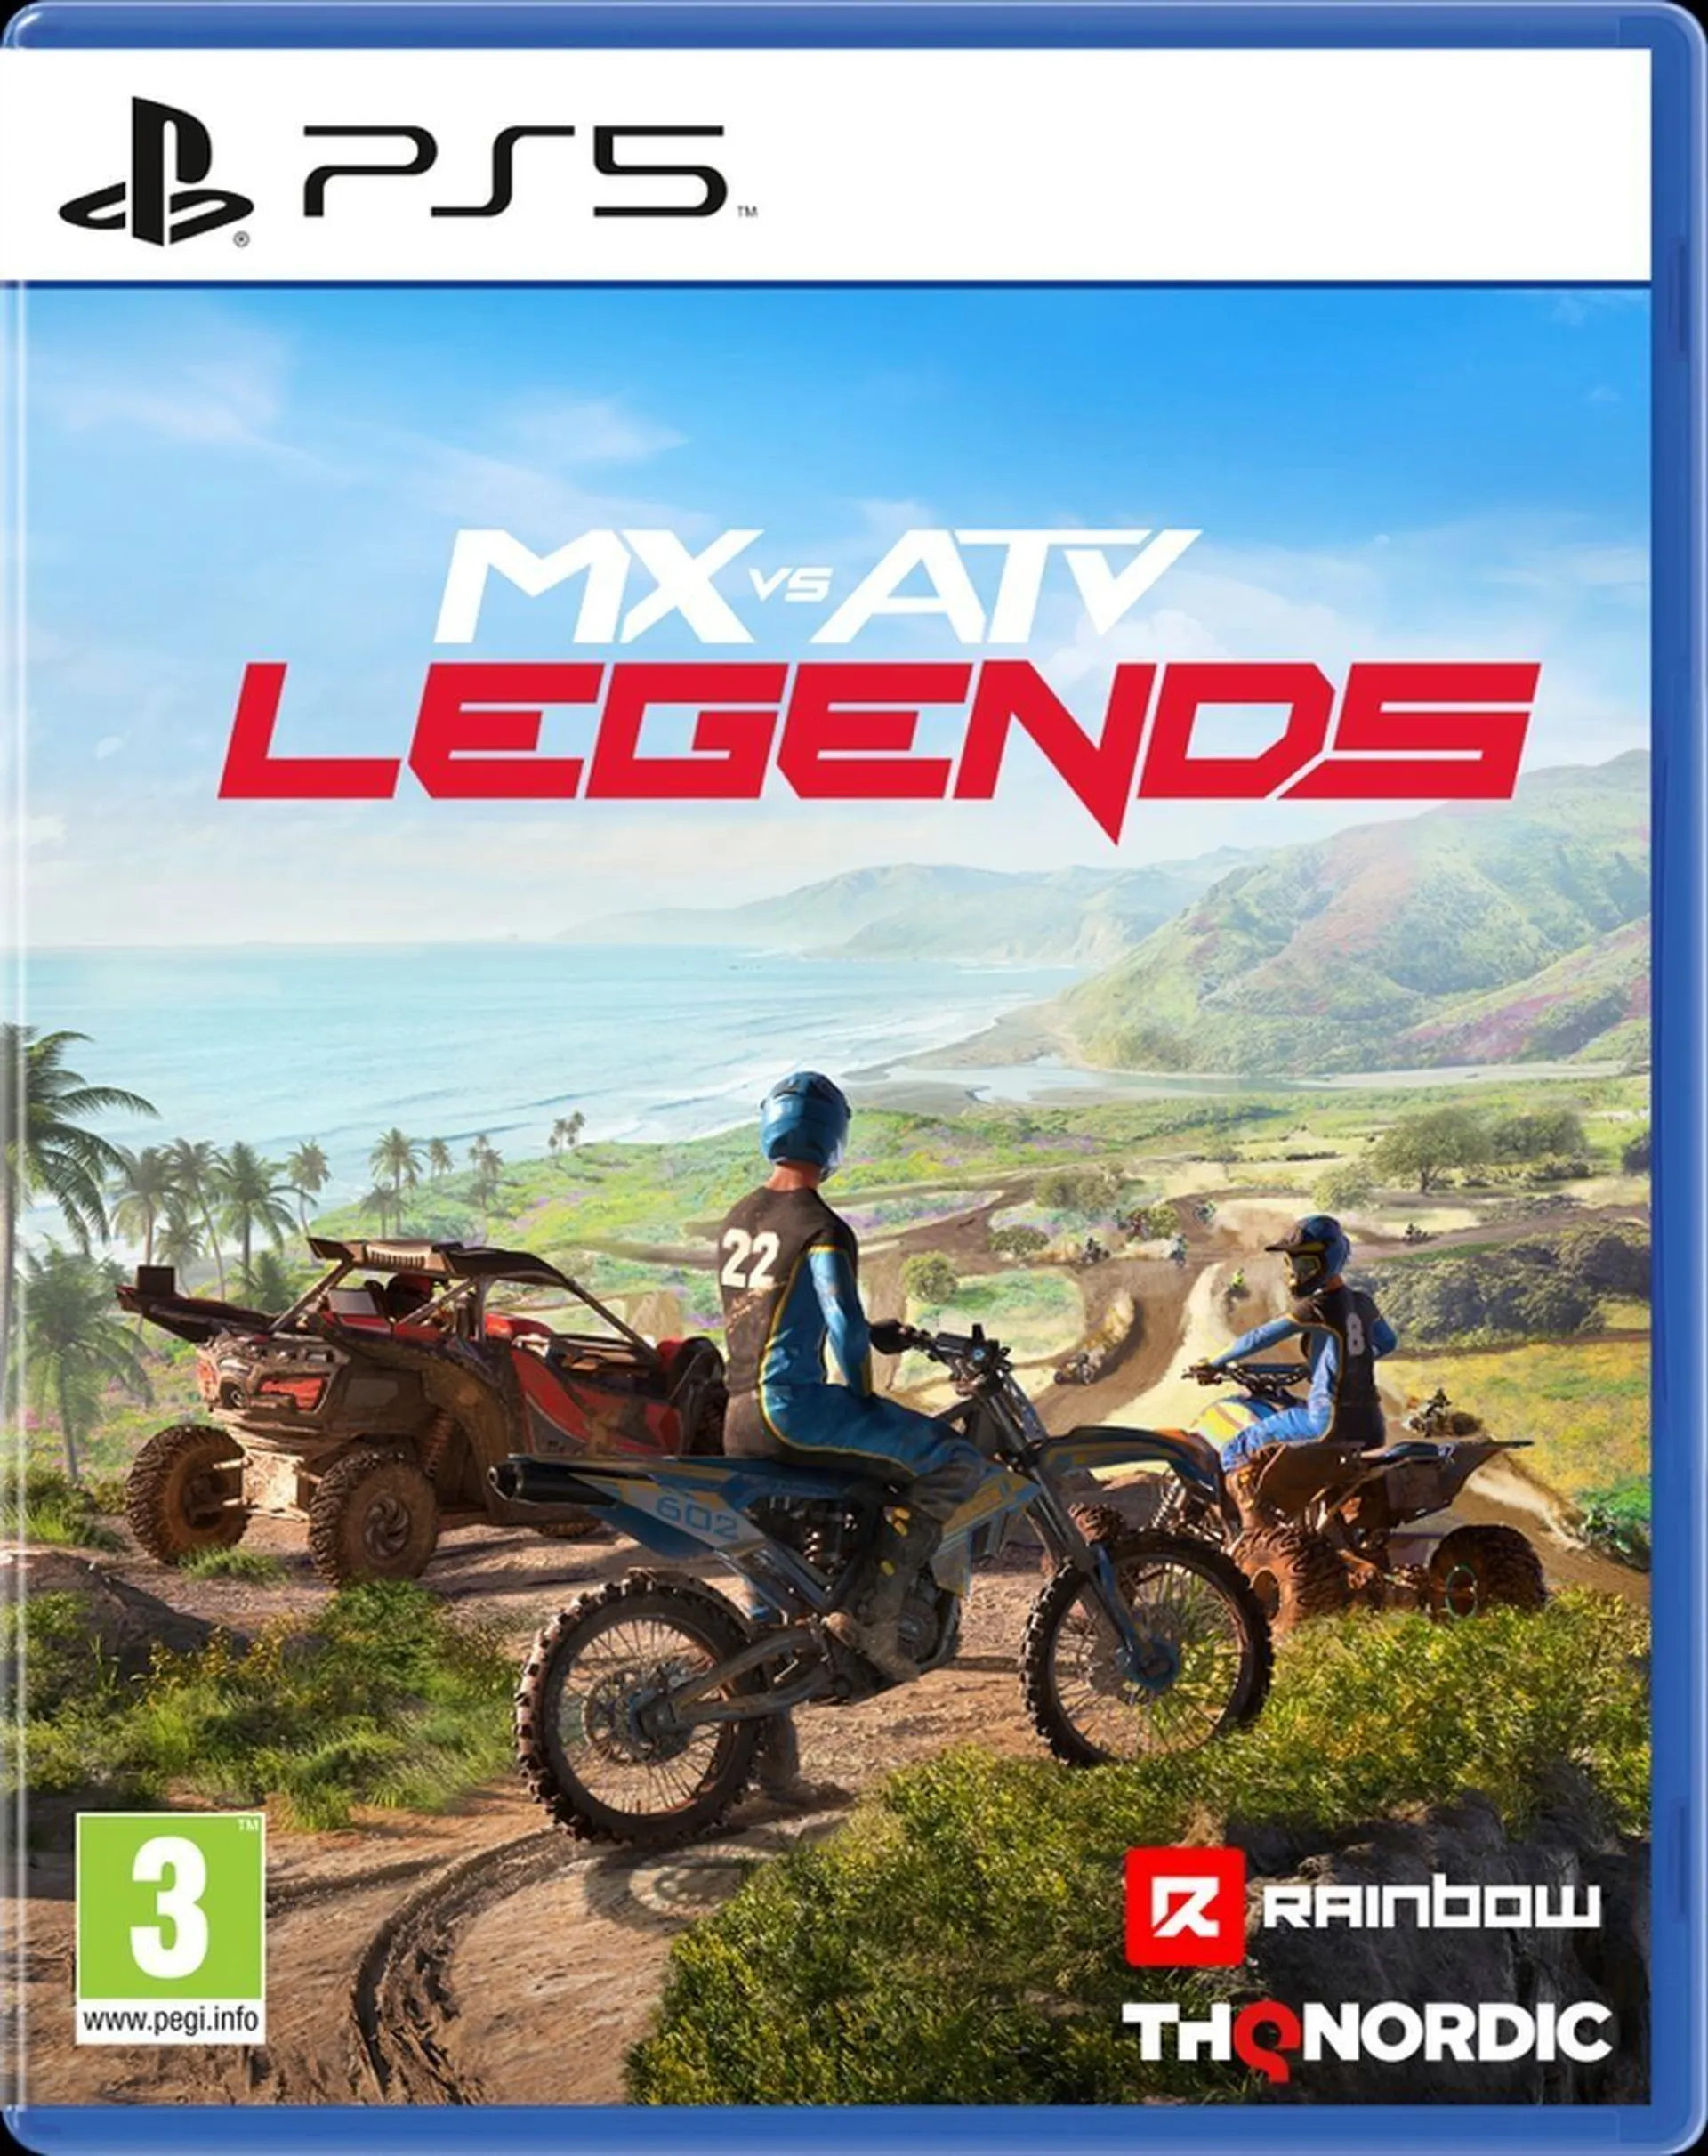 Sony PlayStation 5 MX vs ATV Legends